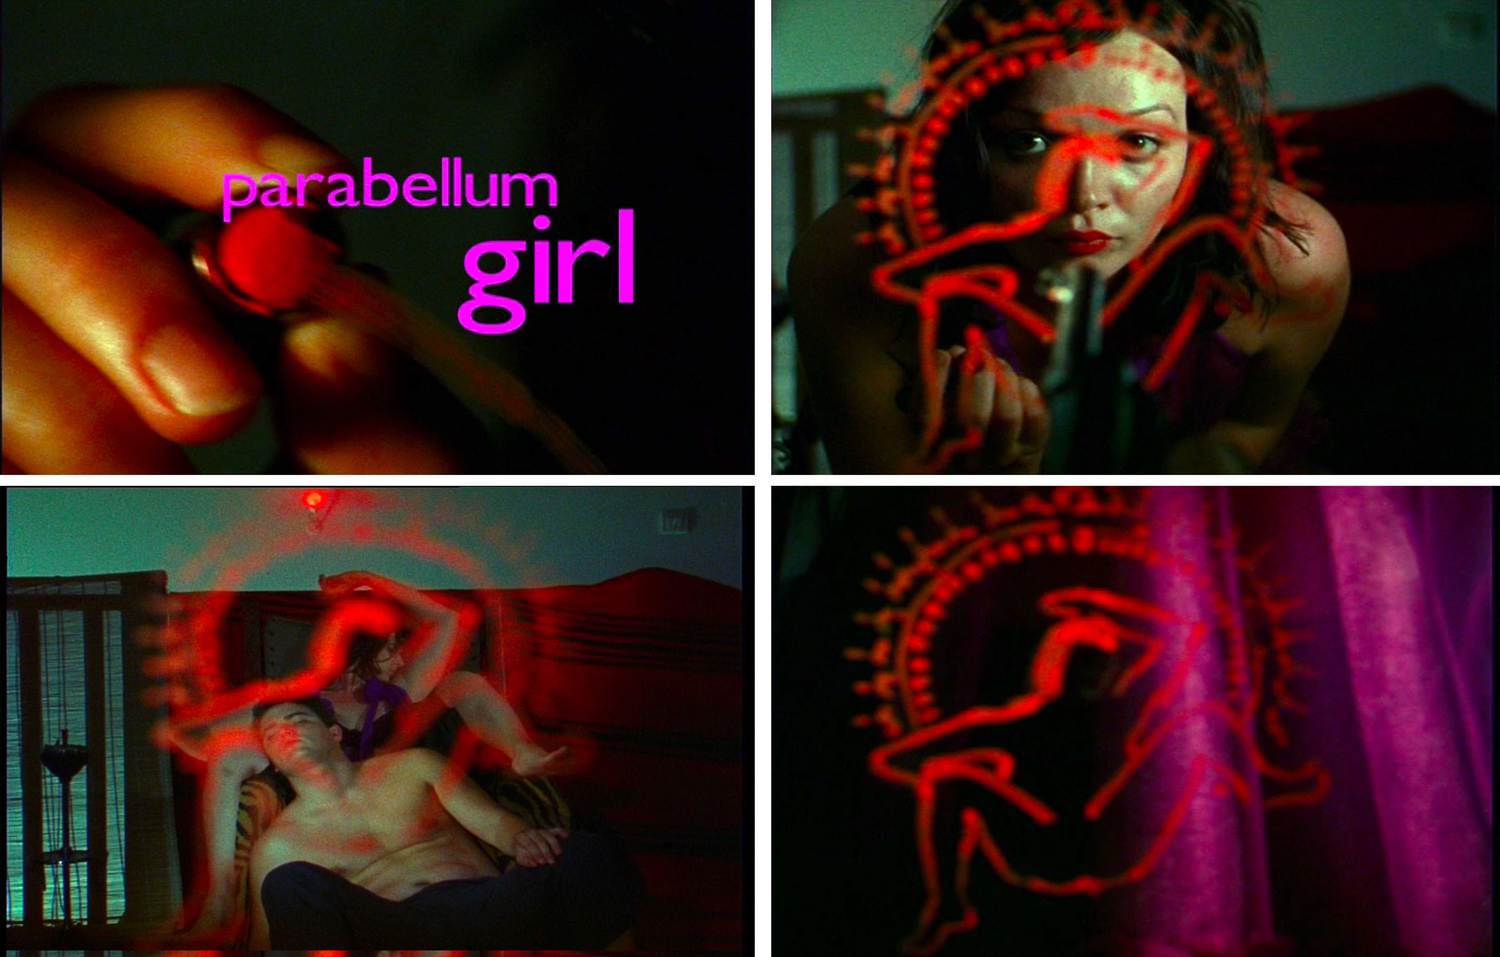 Parabellum Girl, Jean-Charles Hue